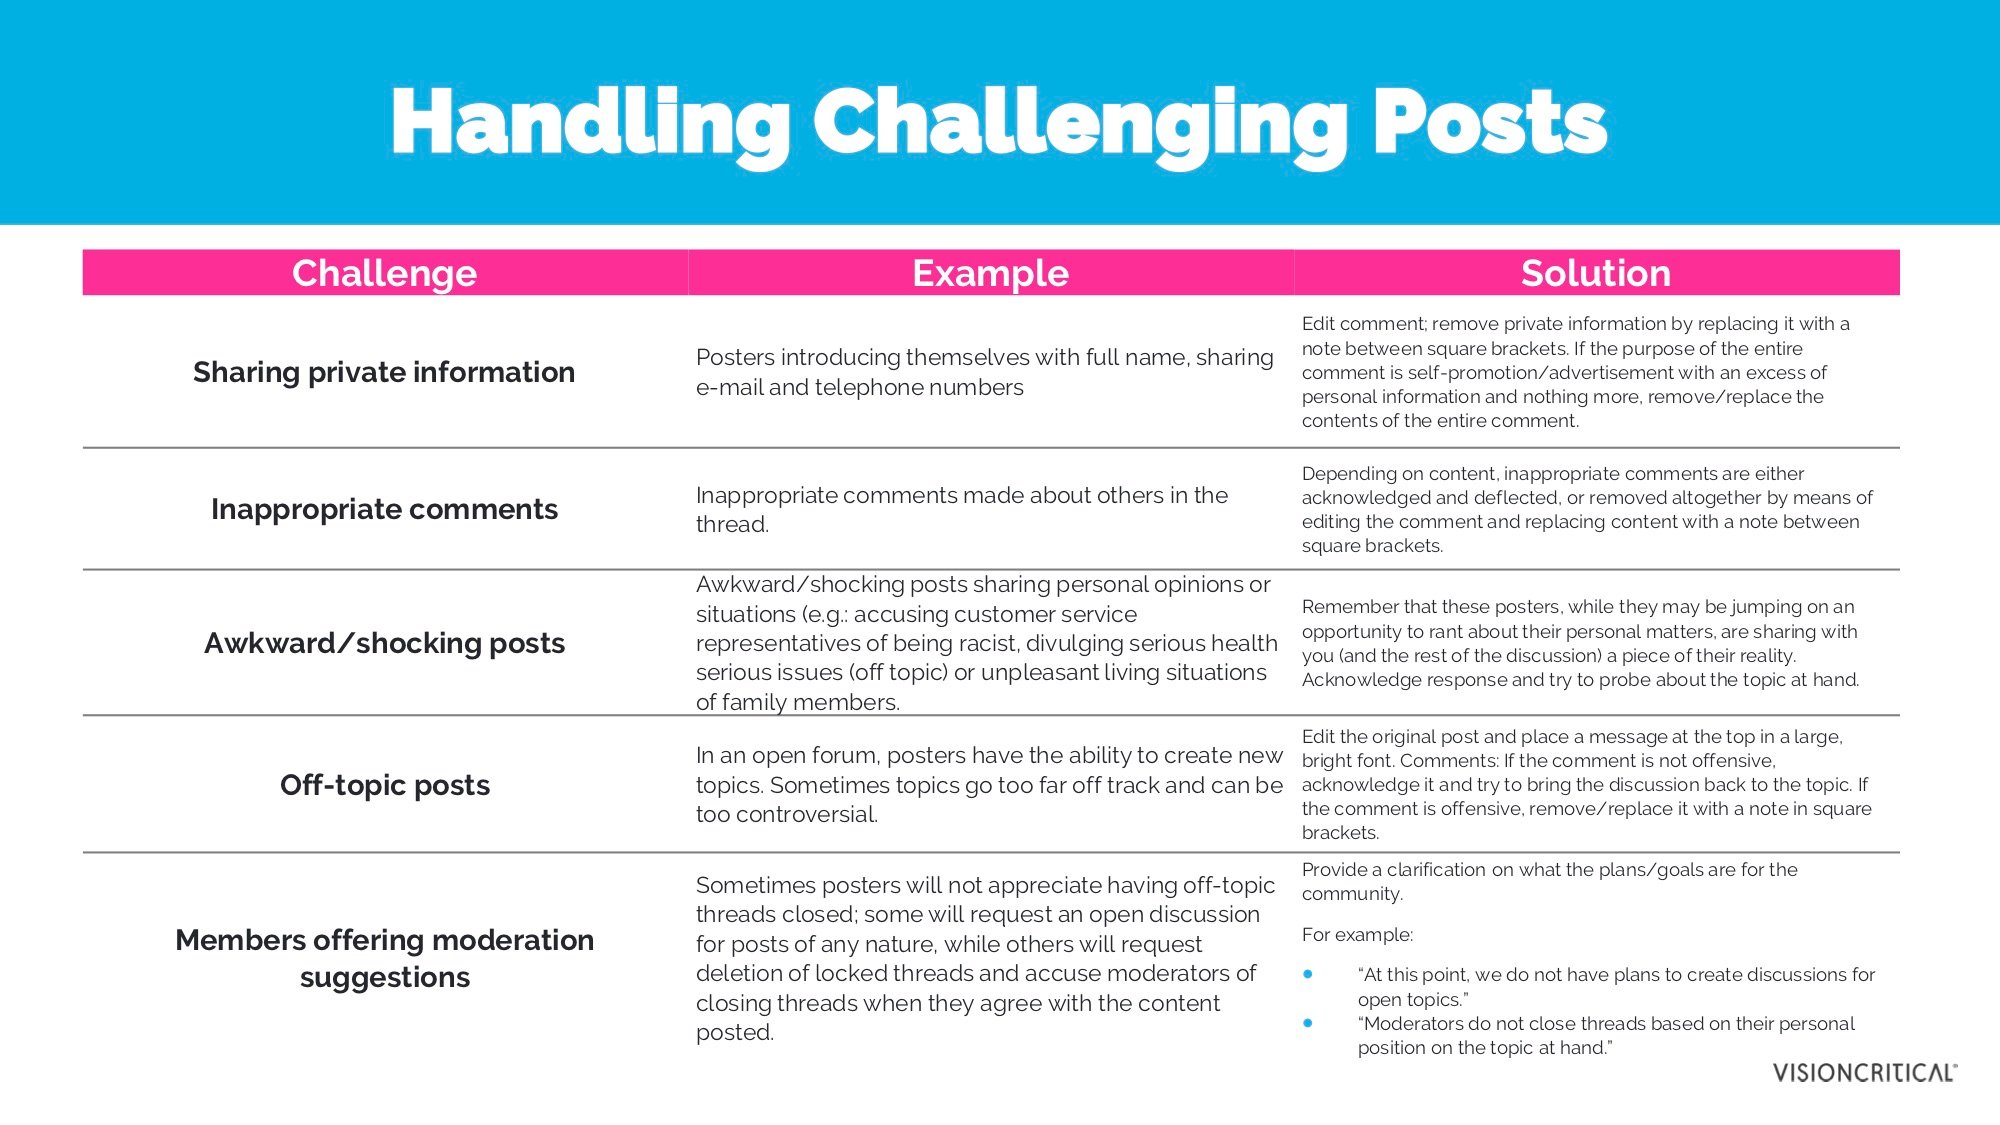 Handling Challenging Posts